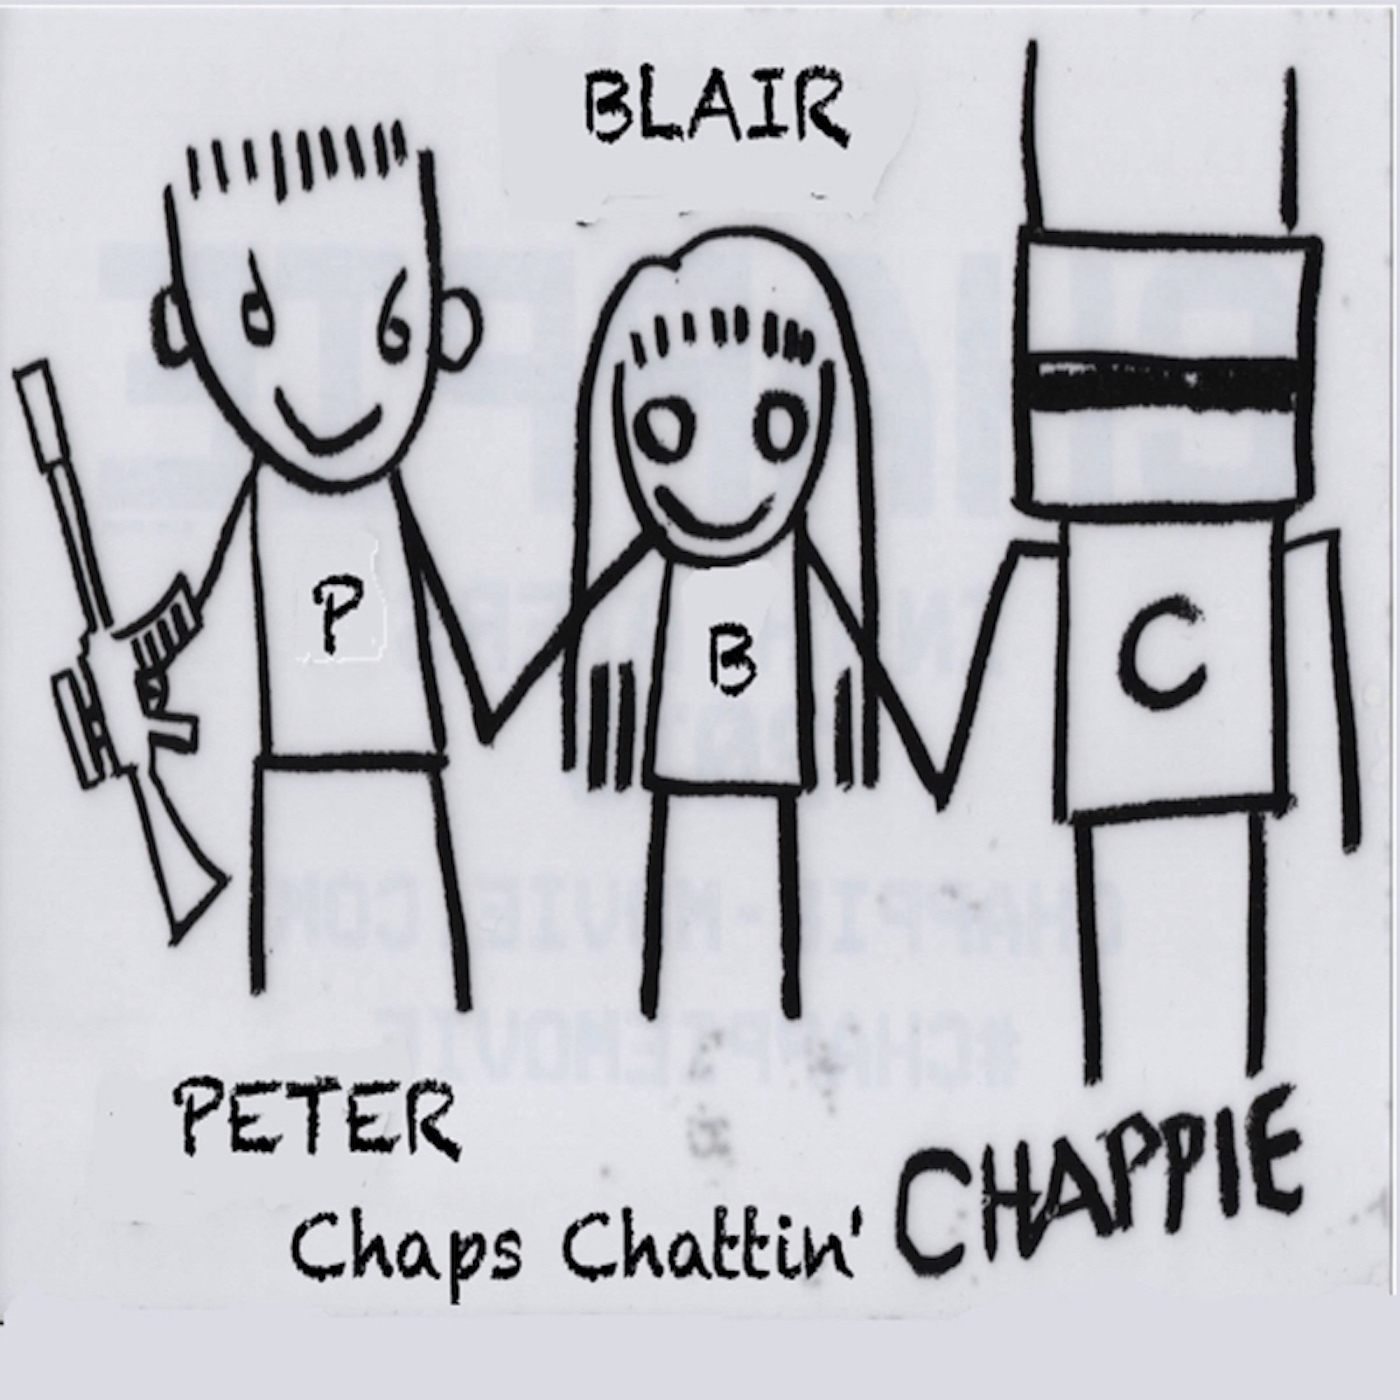 Chaps Chattin' Chappie